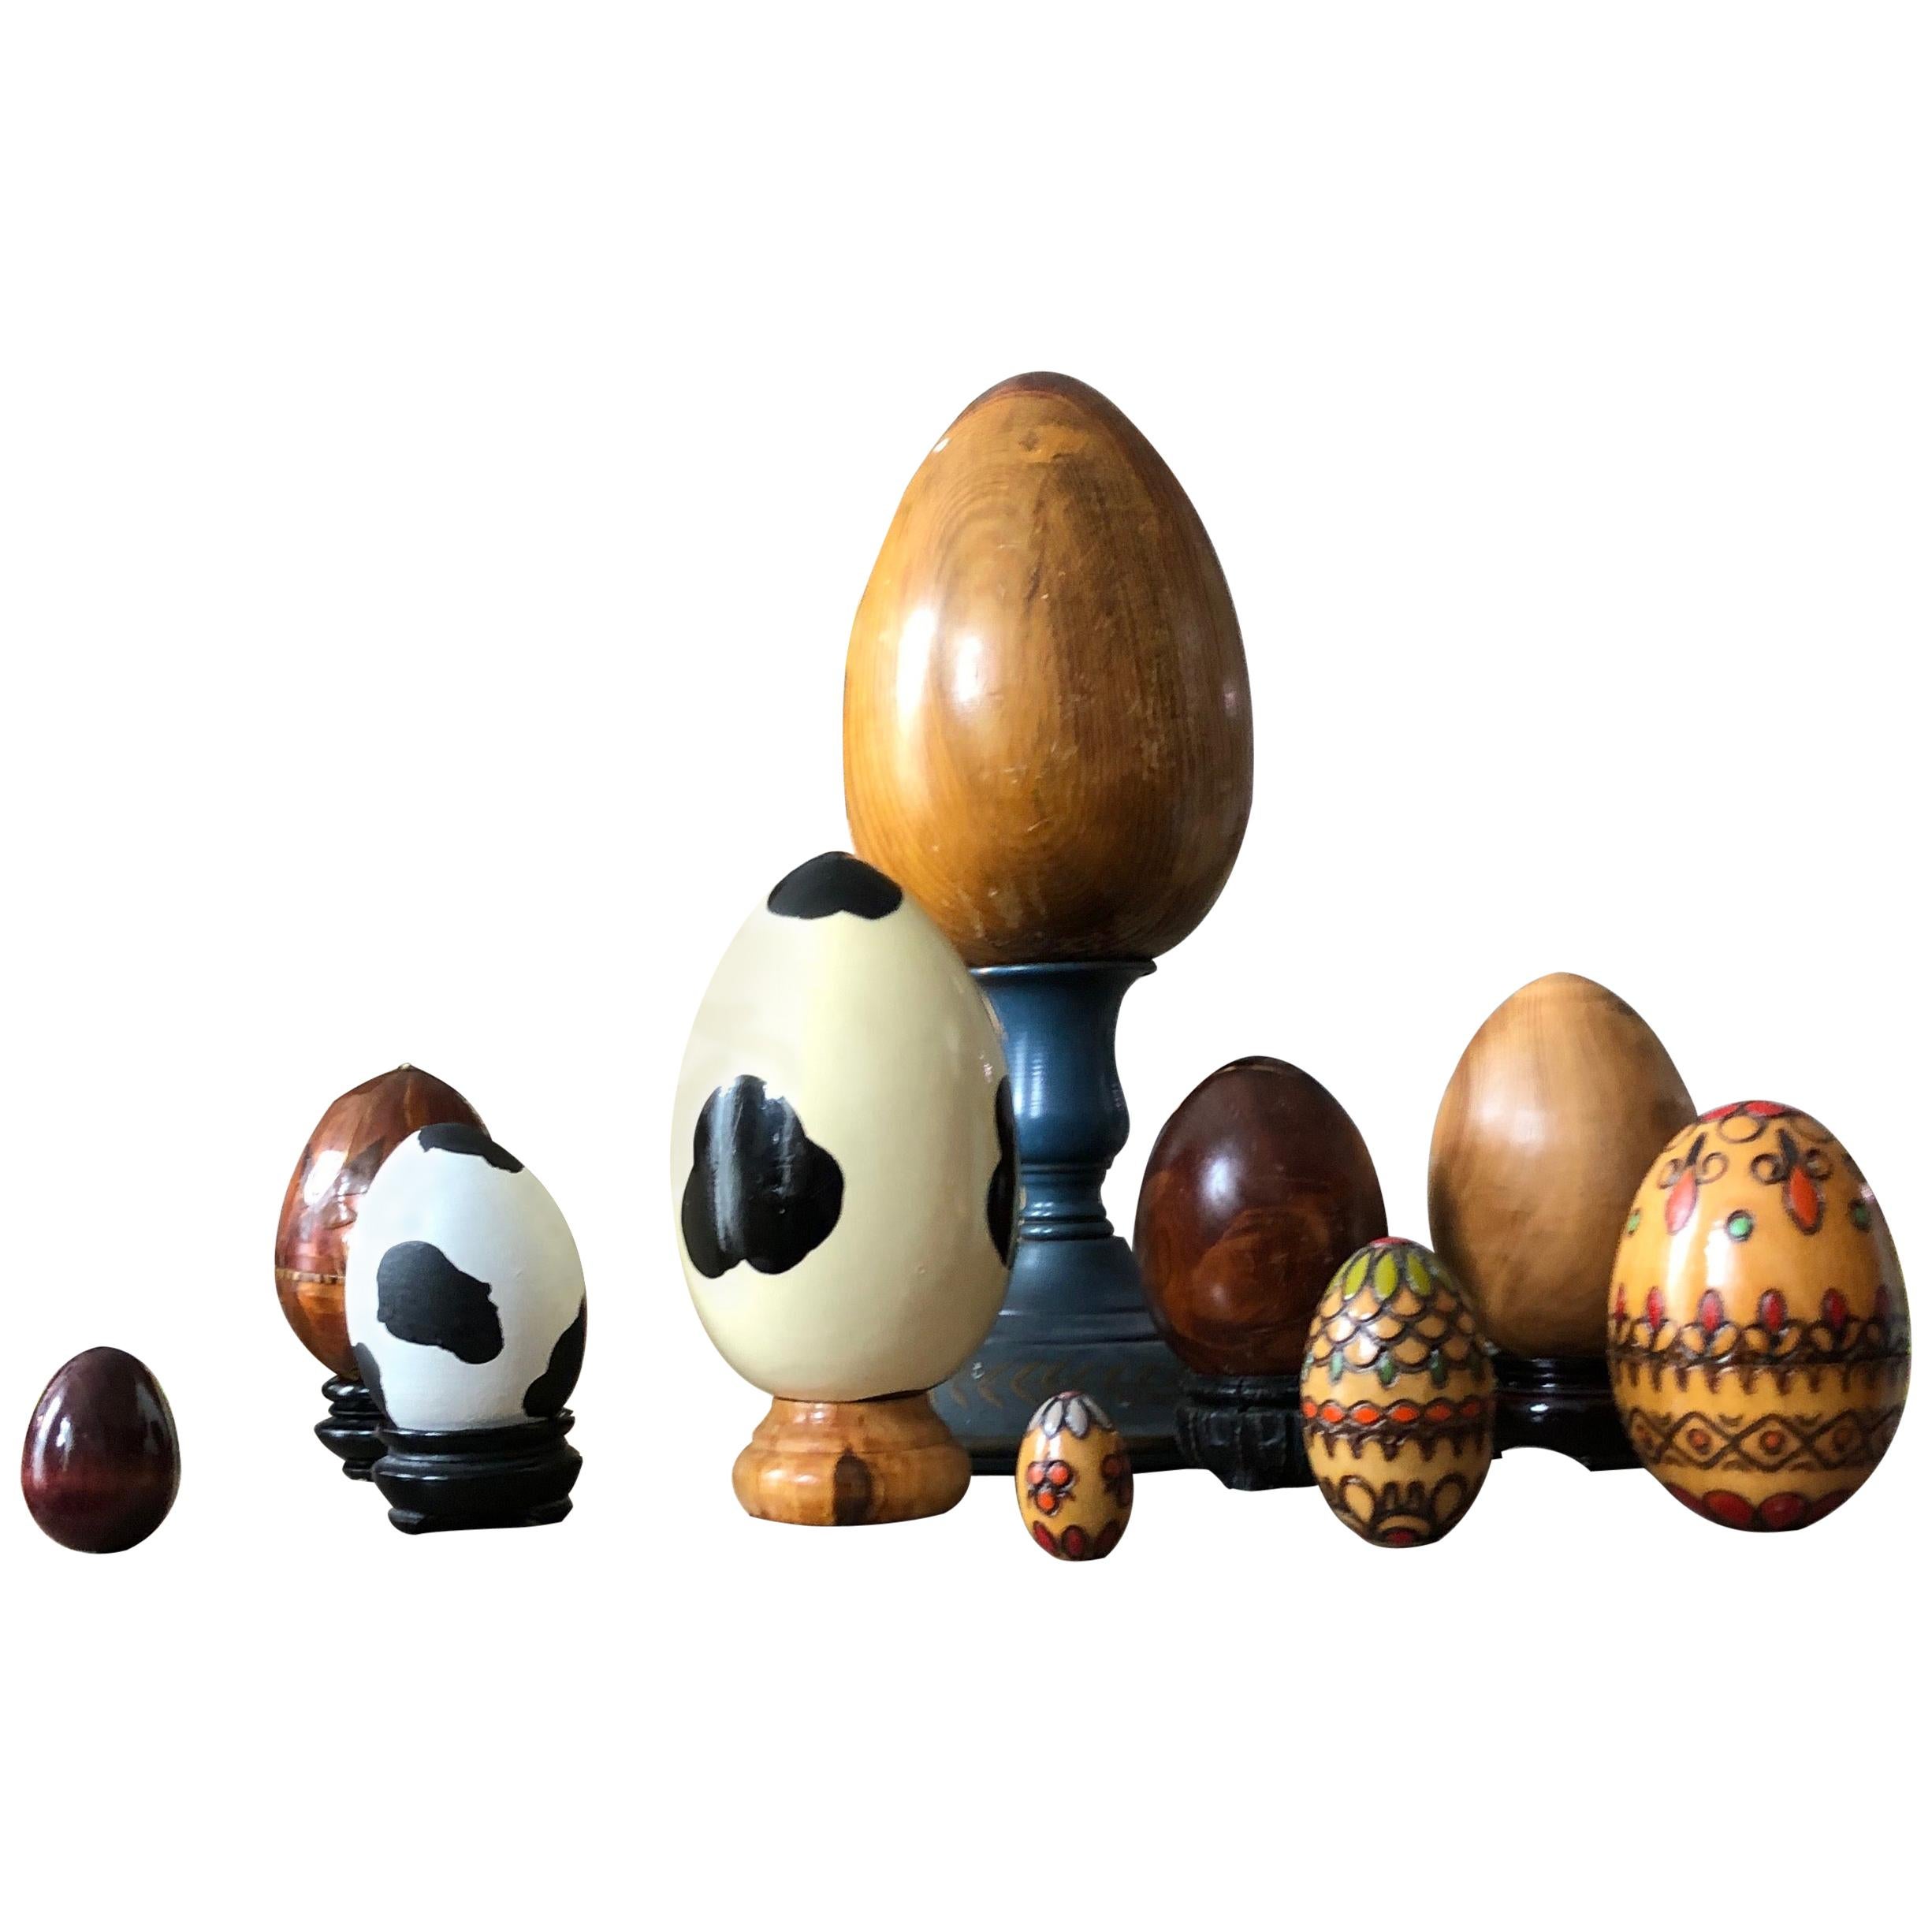 Organic Modern Hand Carved & Painted Wood & Porcelain Decorative Egg Display Set For Sale